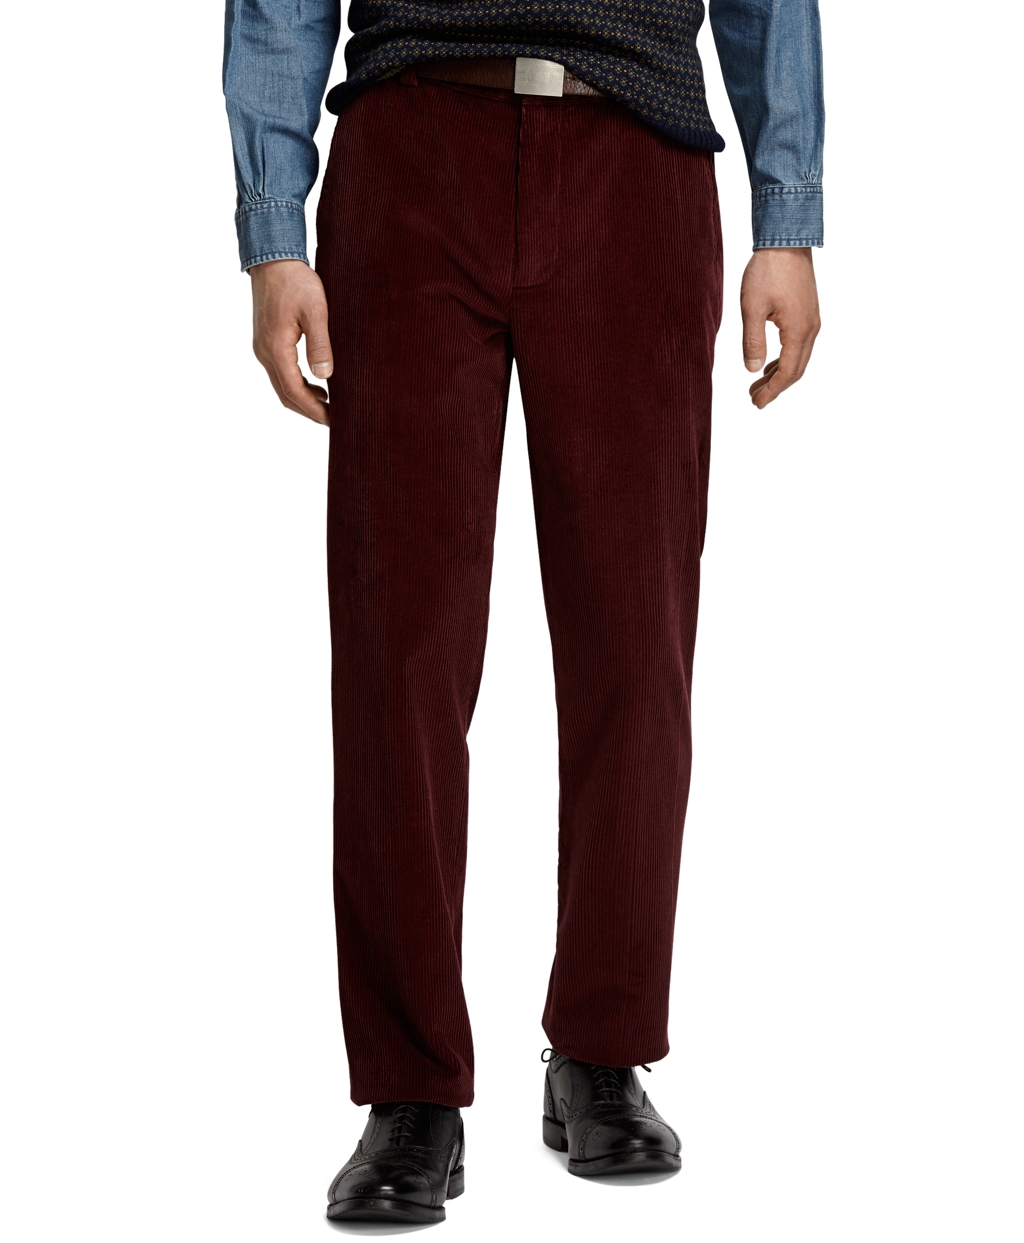 Lyst - Brooks Brothers Clark 8-wale Corduroy Pants in Purple for Men